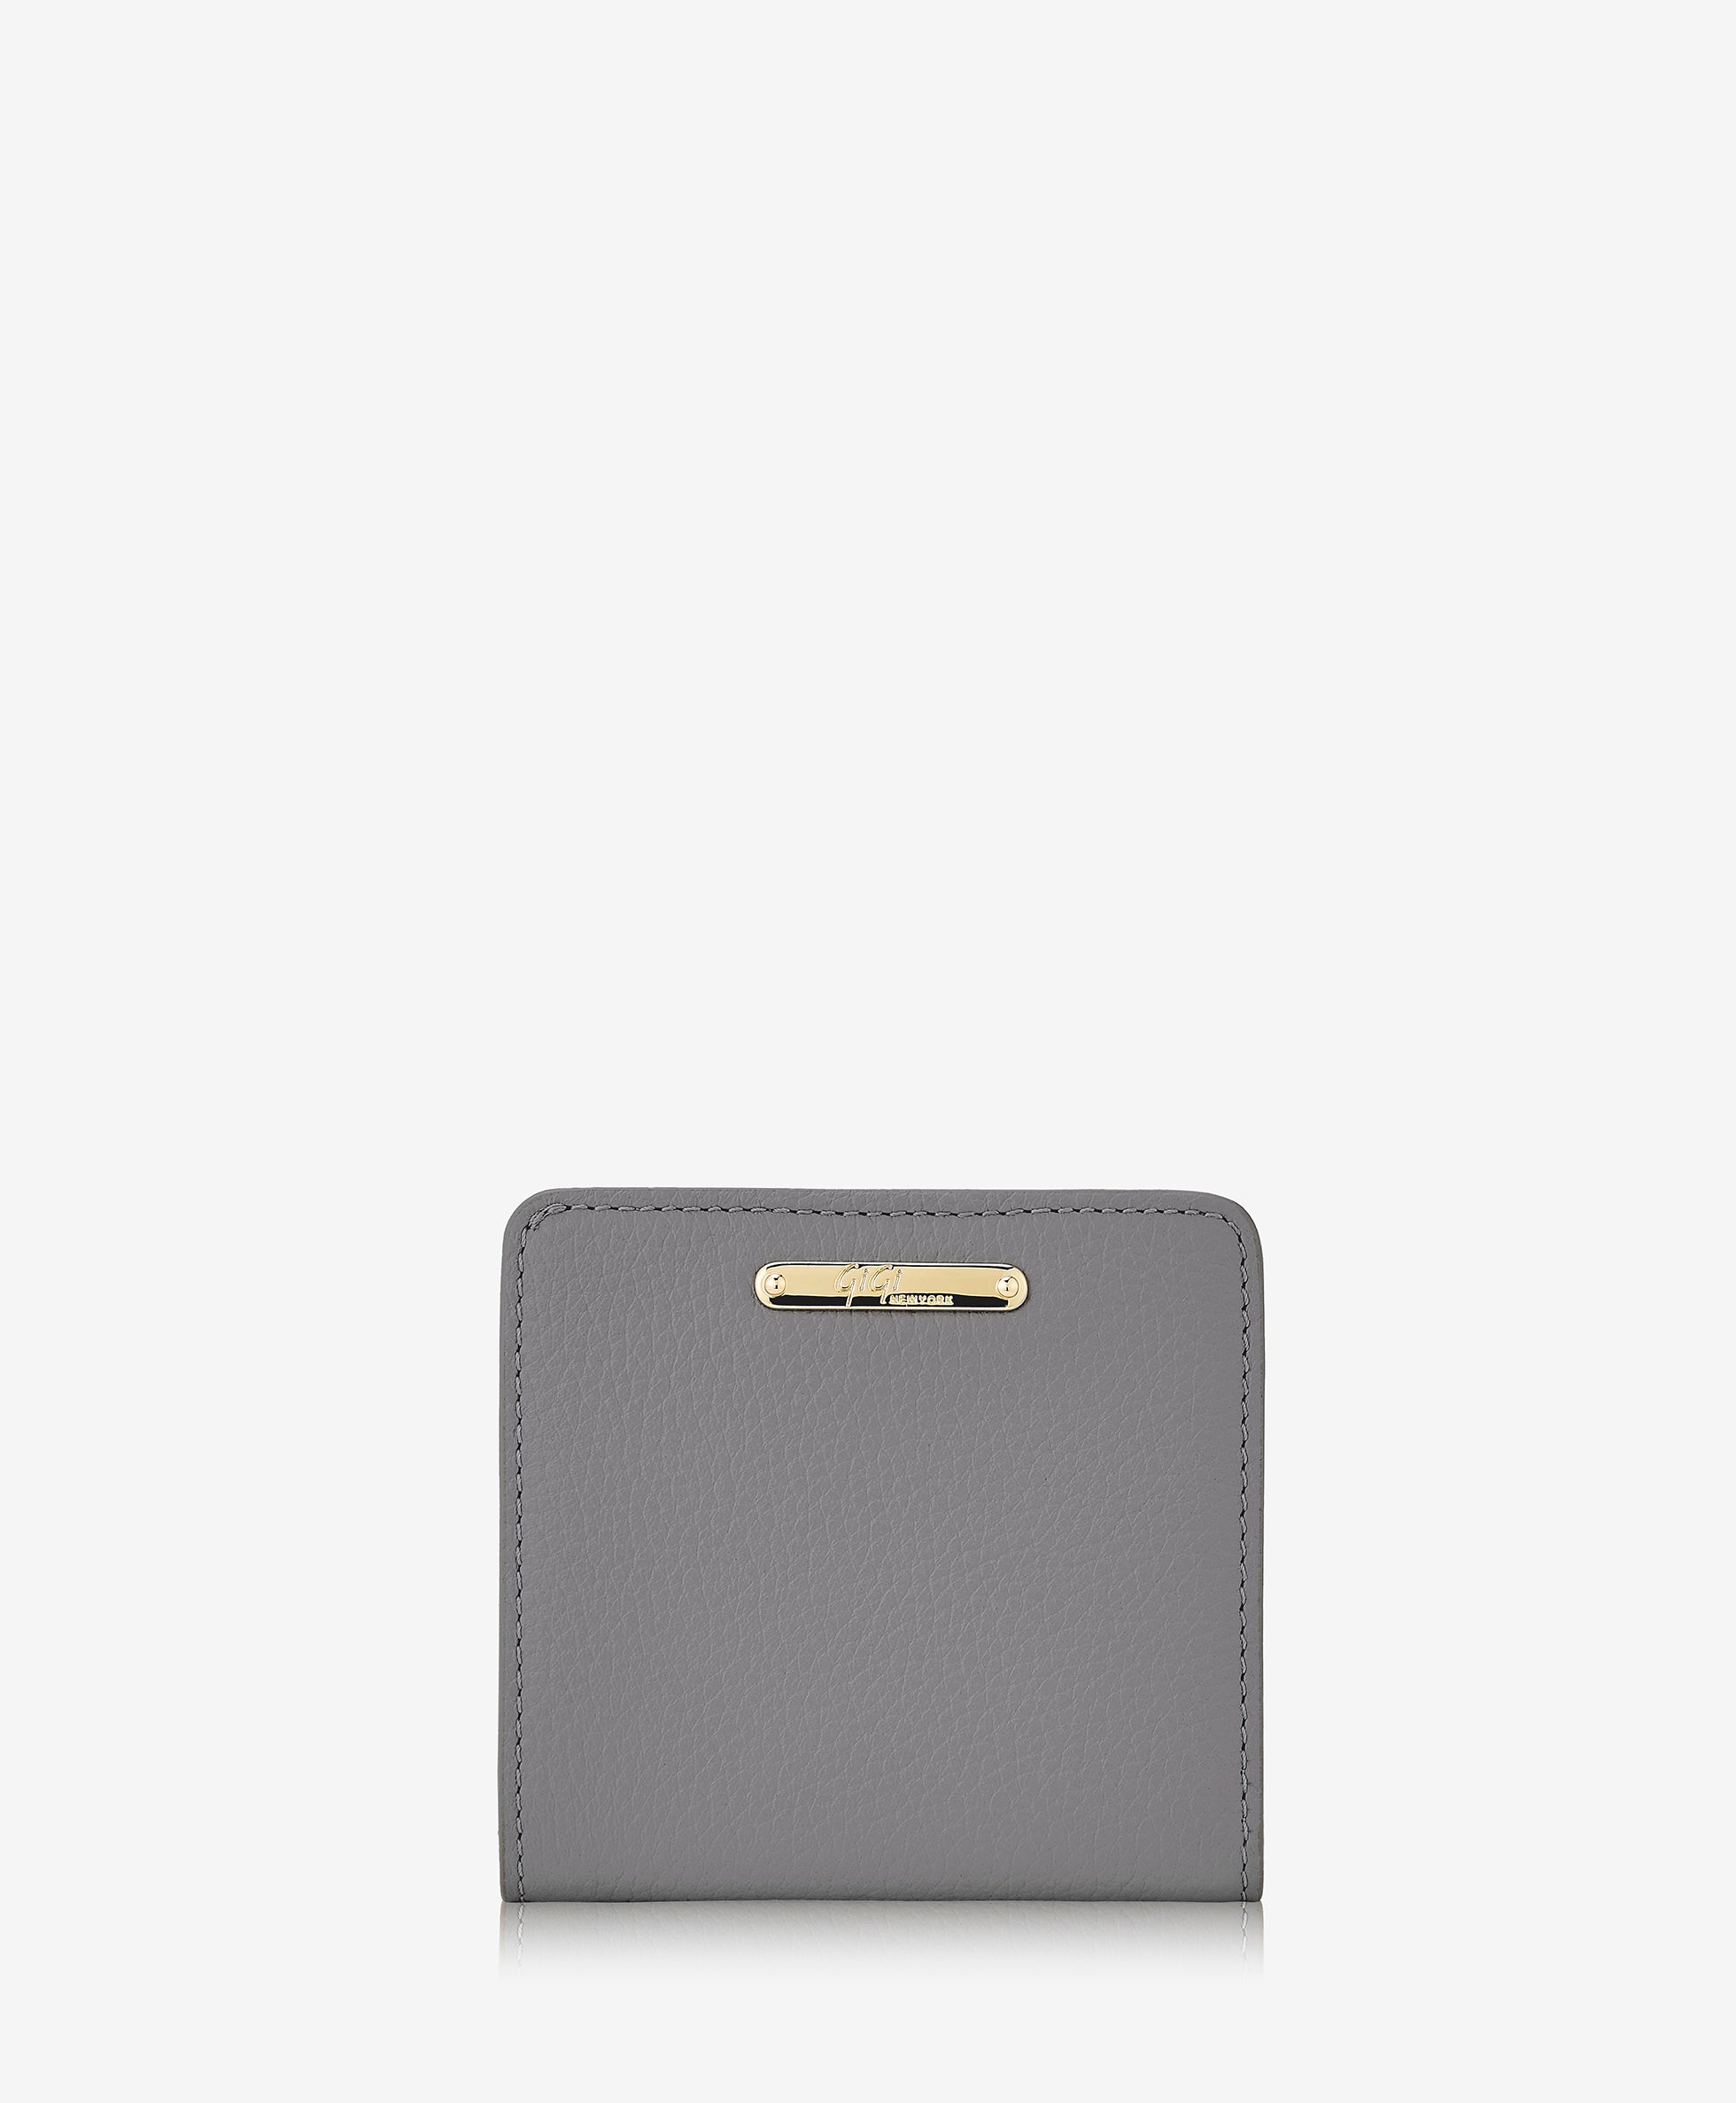 GiGi New York Mini Foldover Wallet Slate Pebble Grain Leather